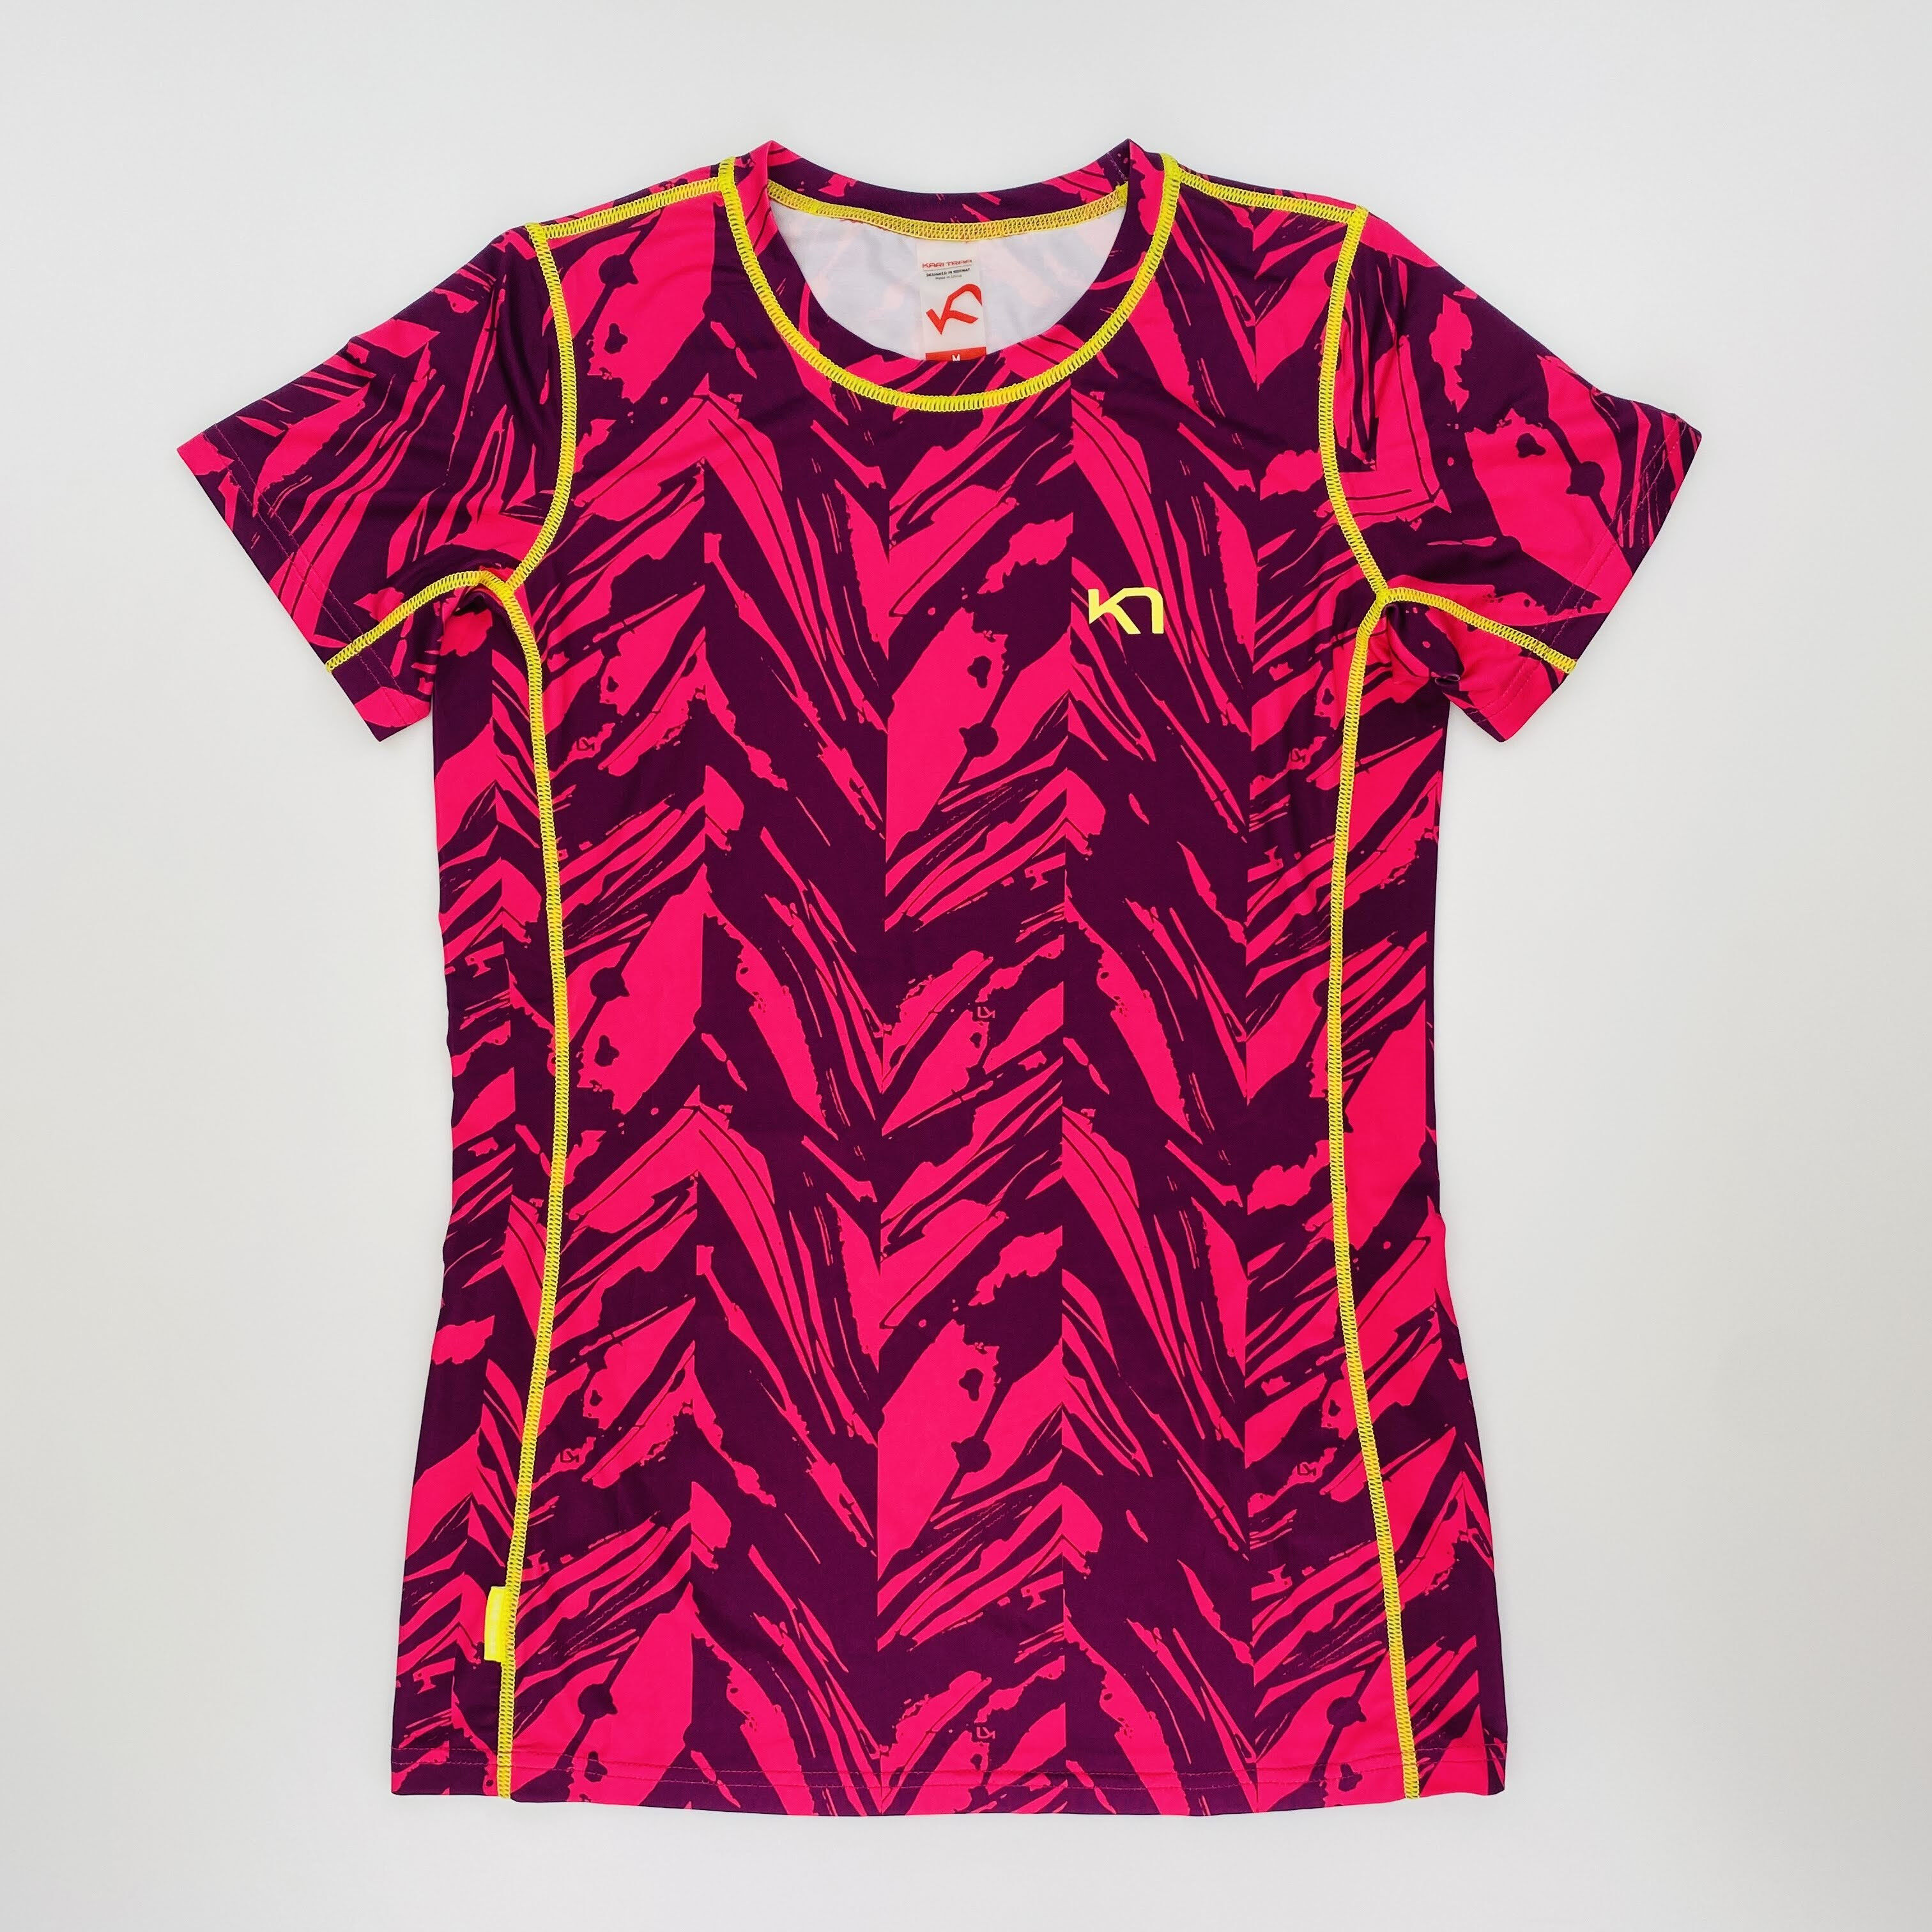 Kari Traa Opplagt Tee - Second Hand T-shirt - Women's - Pink - M | Hardloop